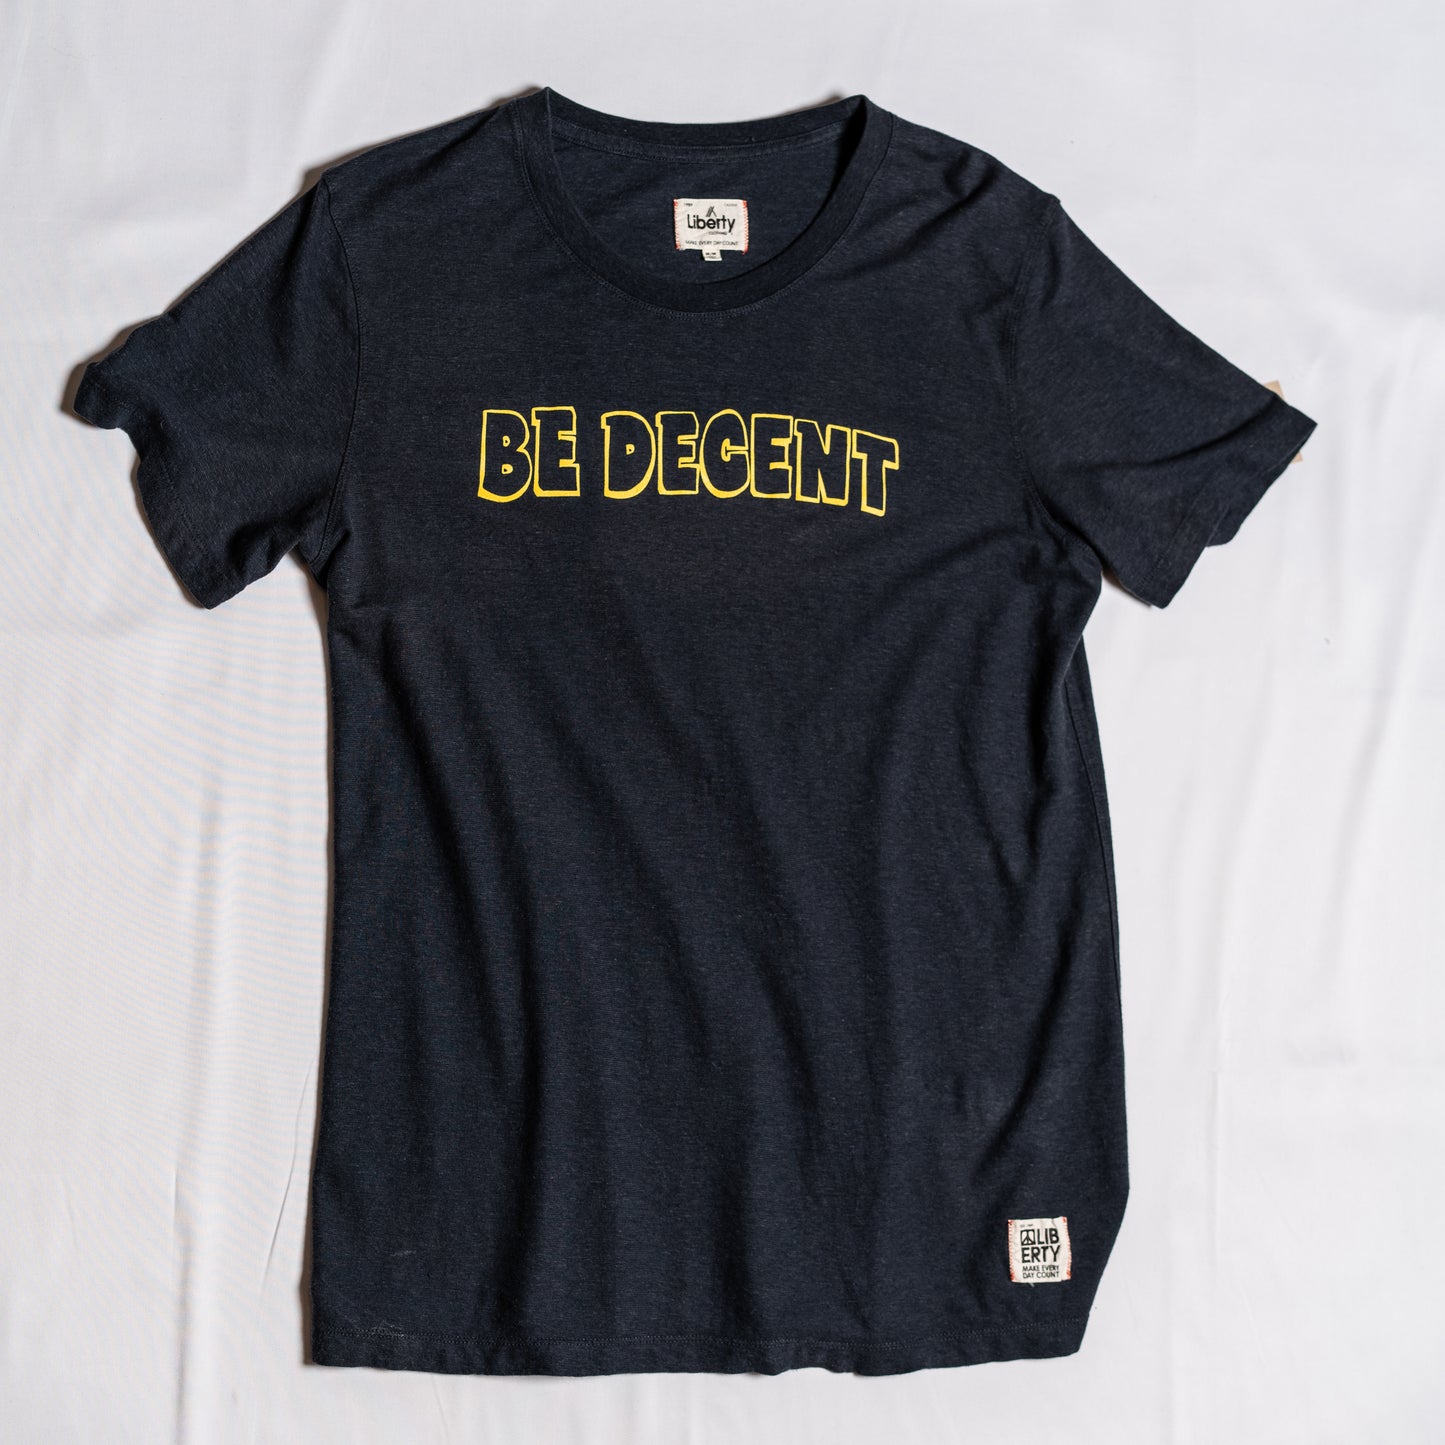 Liberty Clothing Hemp T shirt / Be Decent